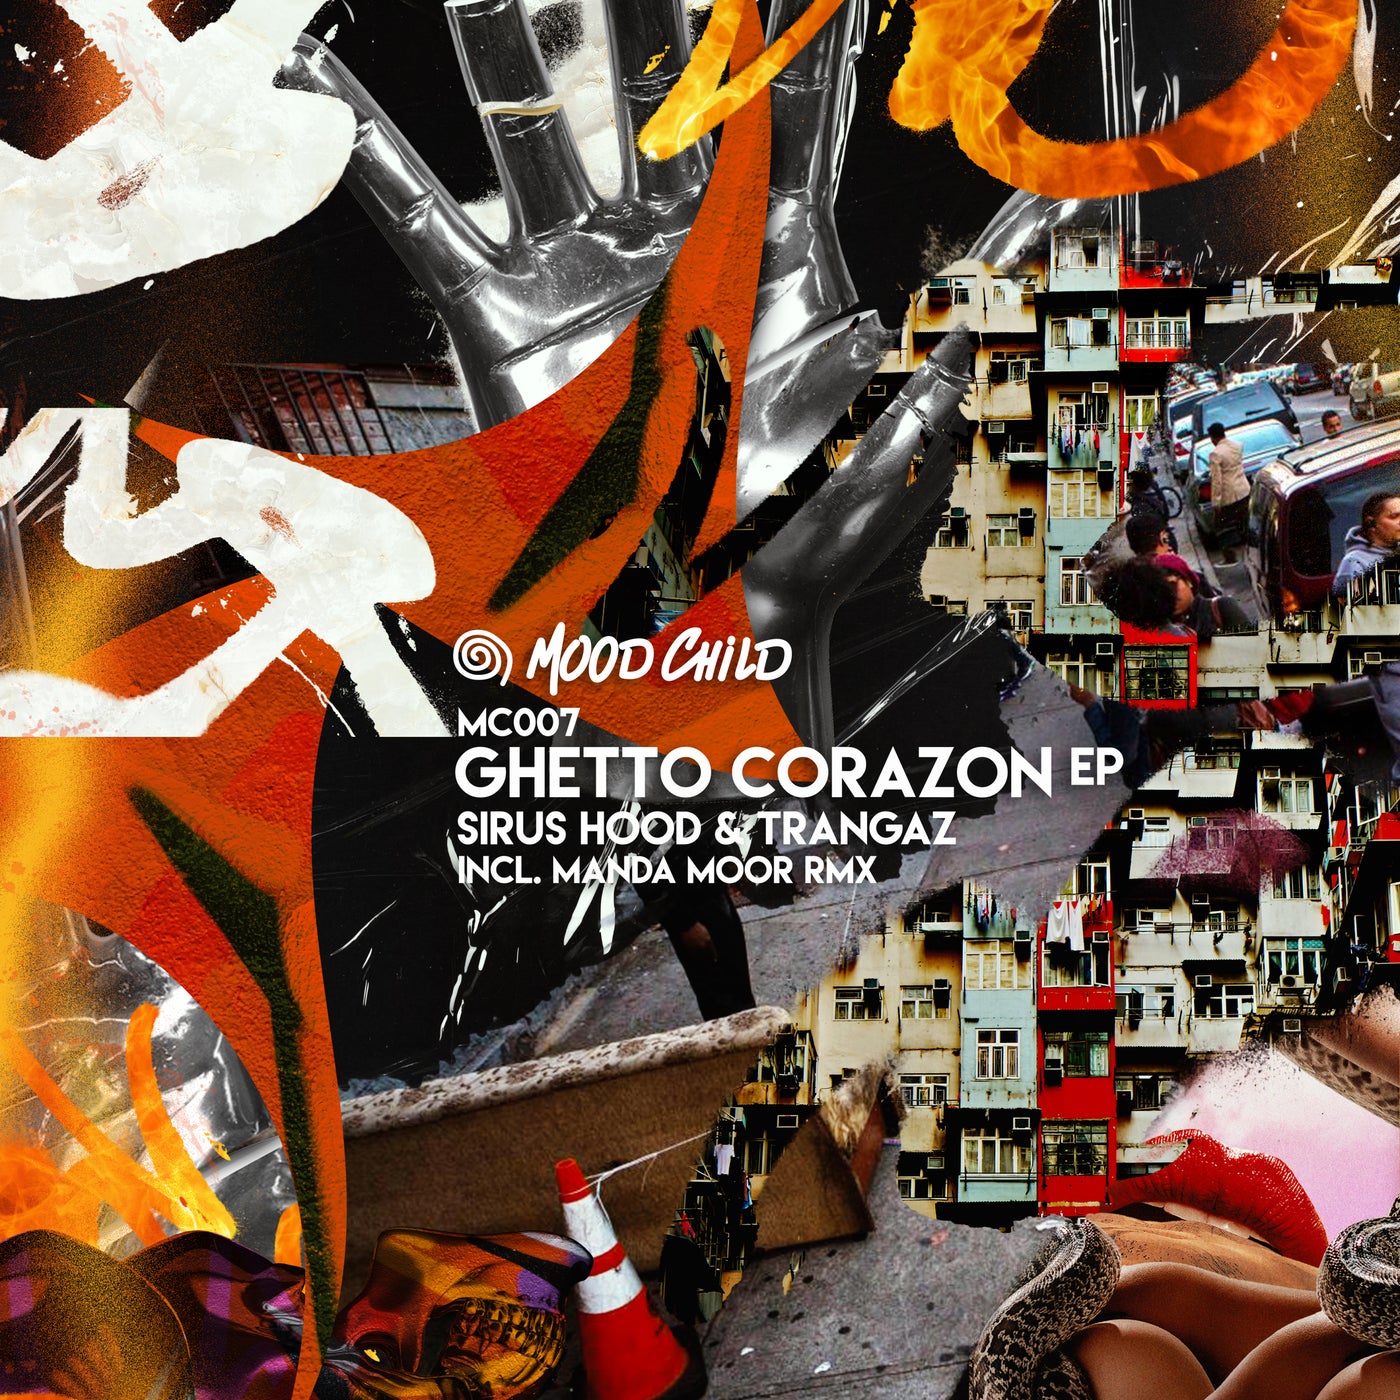 image cover: Sirus Hood, Trangaz - Ghetto Corazon EP on Mood Child